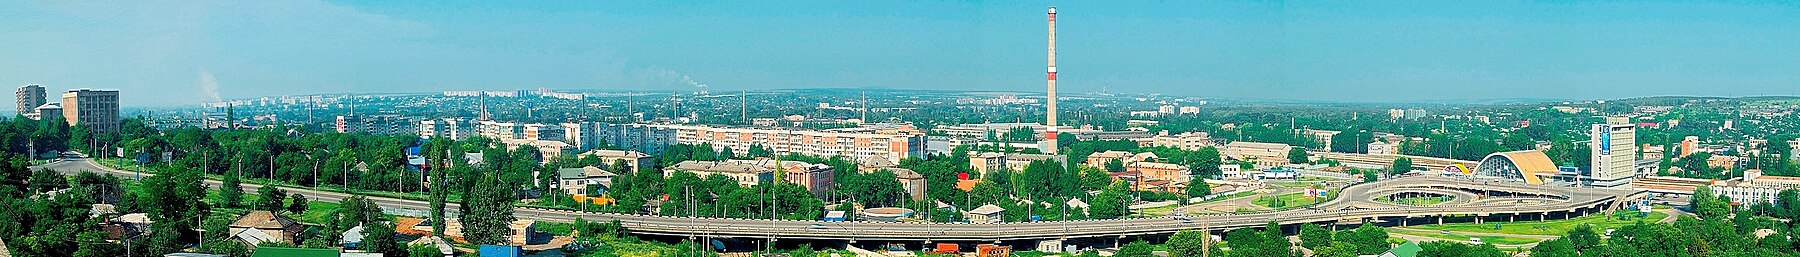 Luhansk Wikivoyage banner.jpg